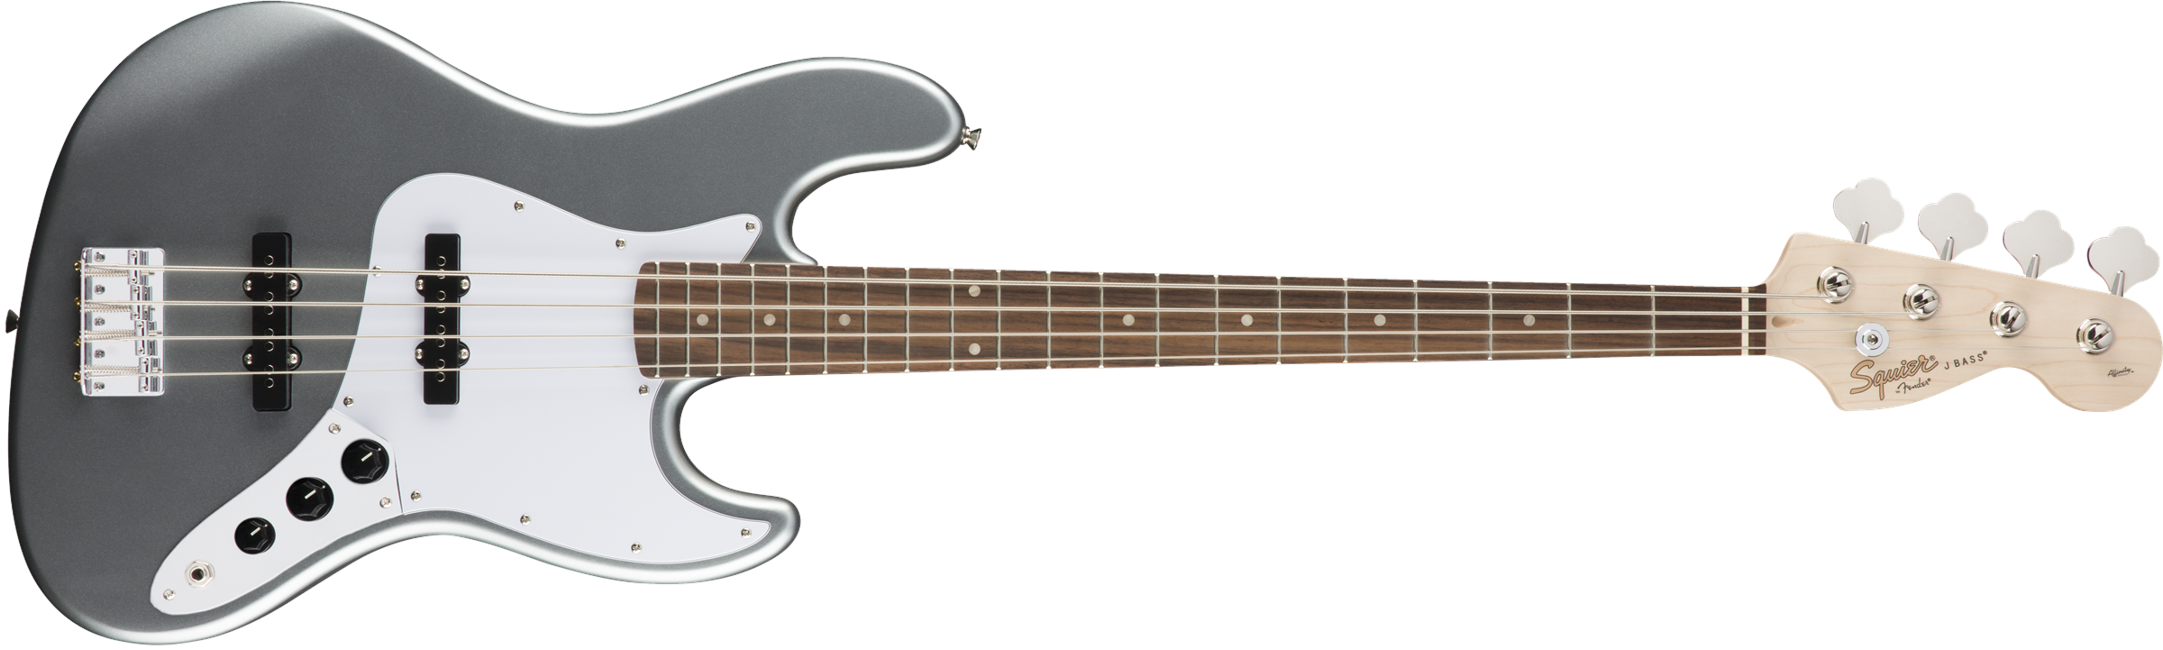 Squier By Fender - Affinity Jazz Bass - Elektrisk Bas (Slick Silver)